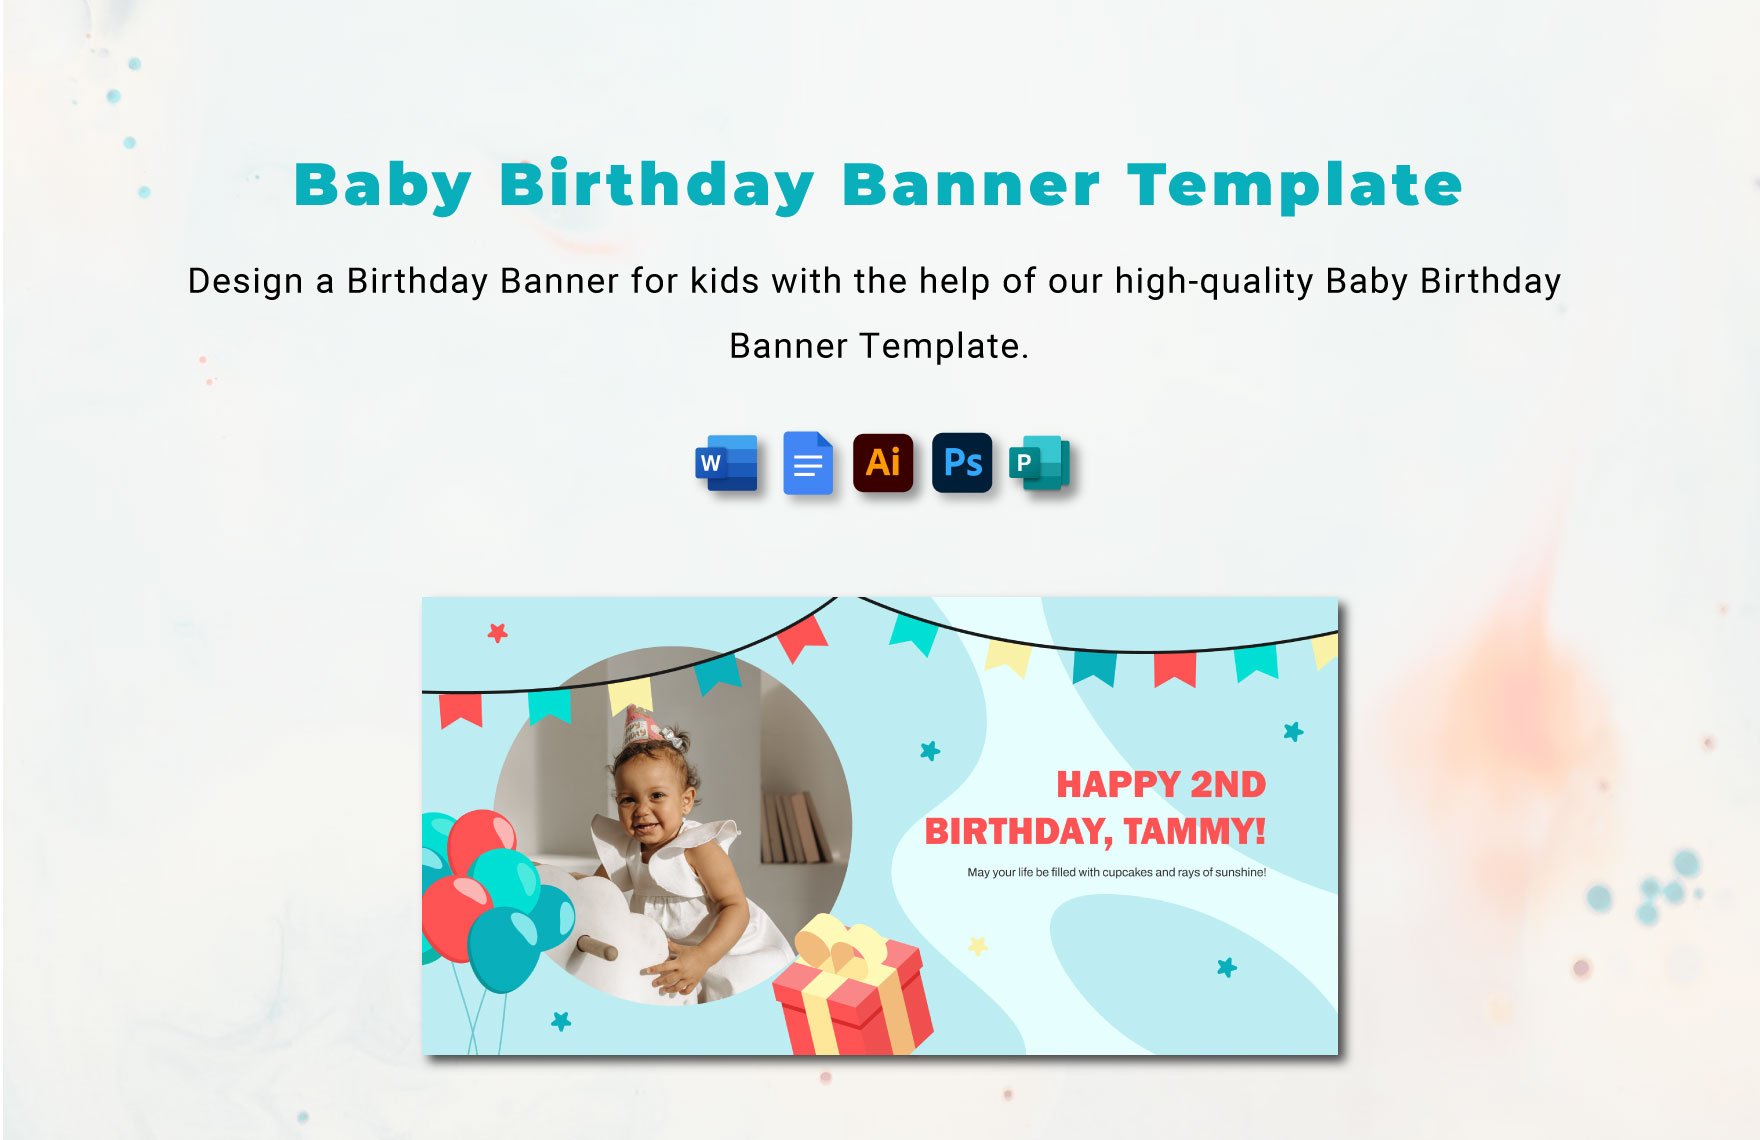 Baby Birthday Banner Template